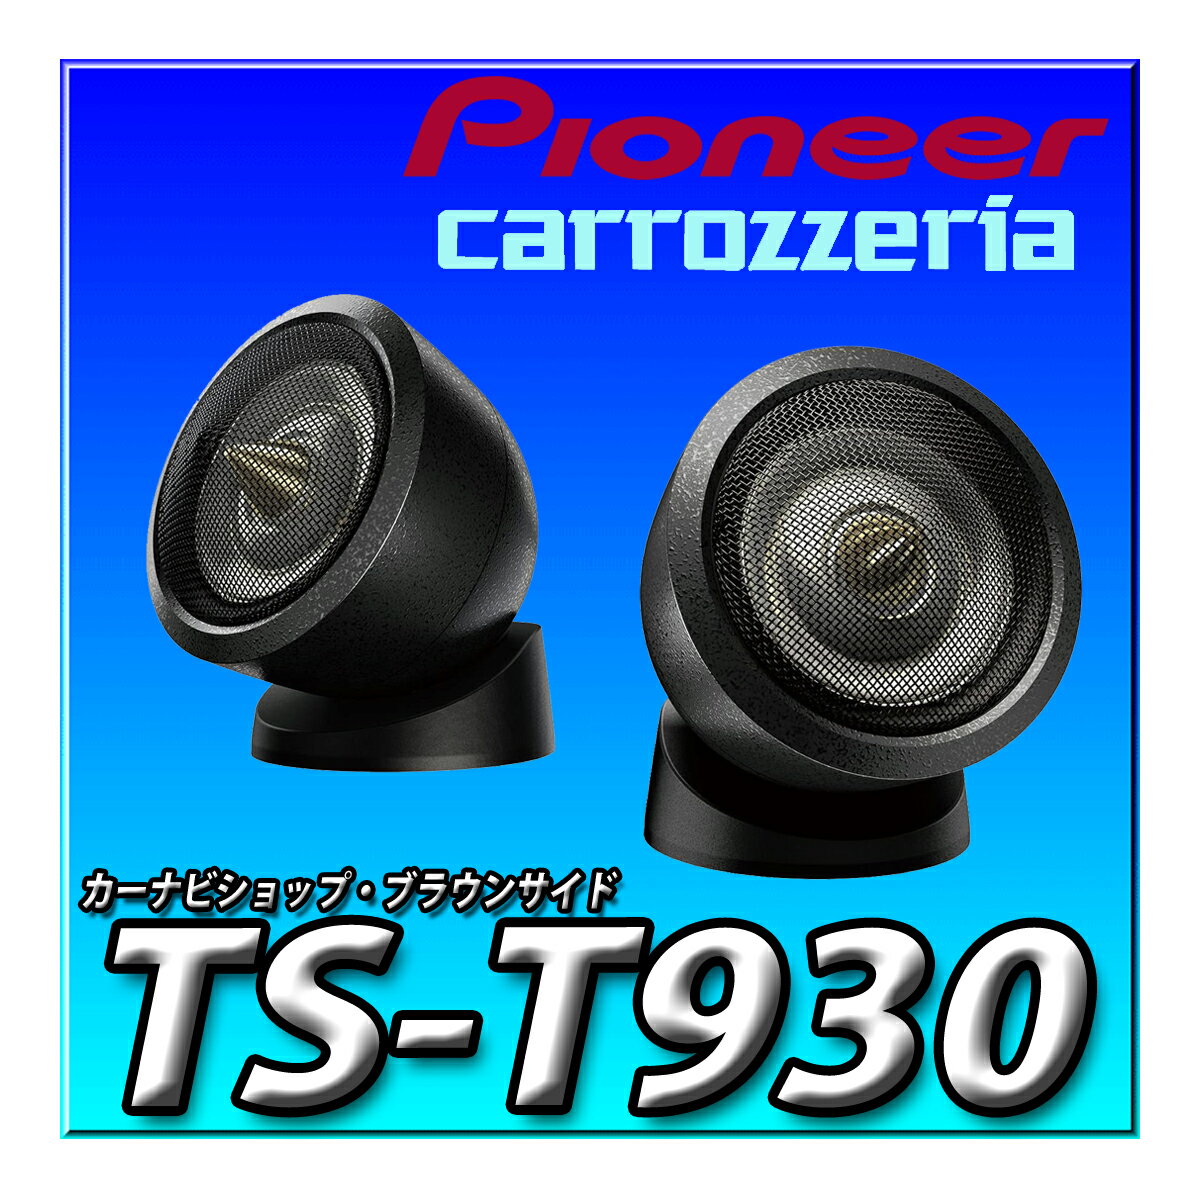 TS-T930 Pioneer パイオニア スピーカー チューンアップトゥイーター ハイレゾ対応 カロッツェリア